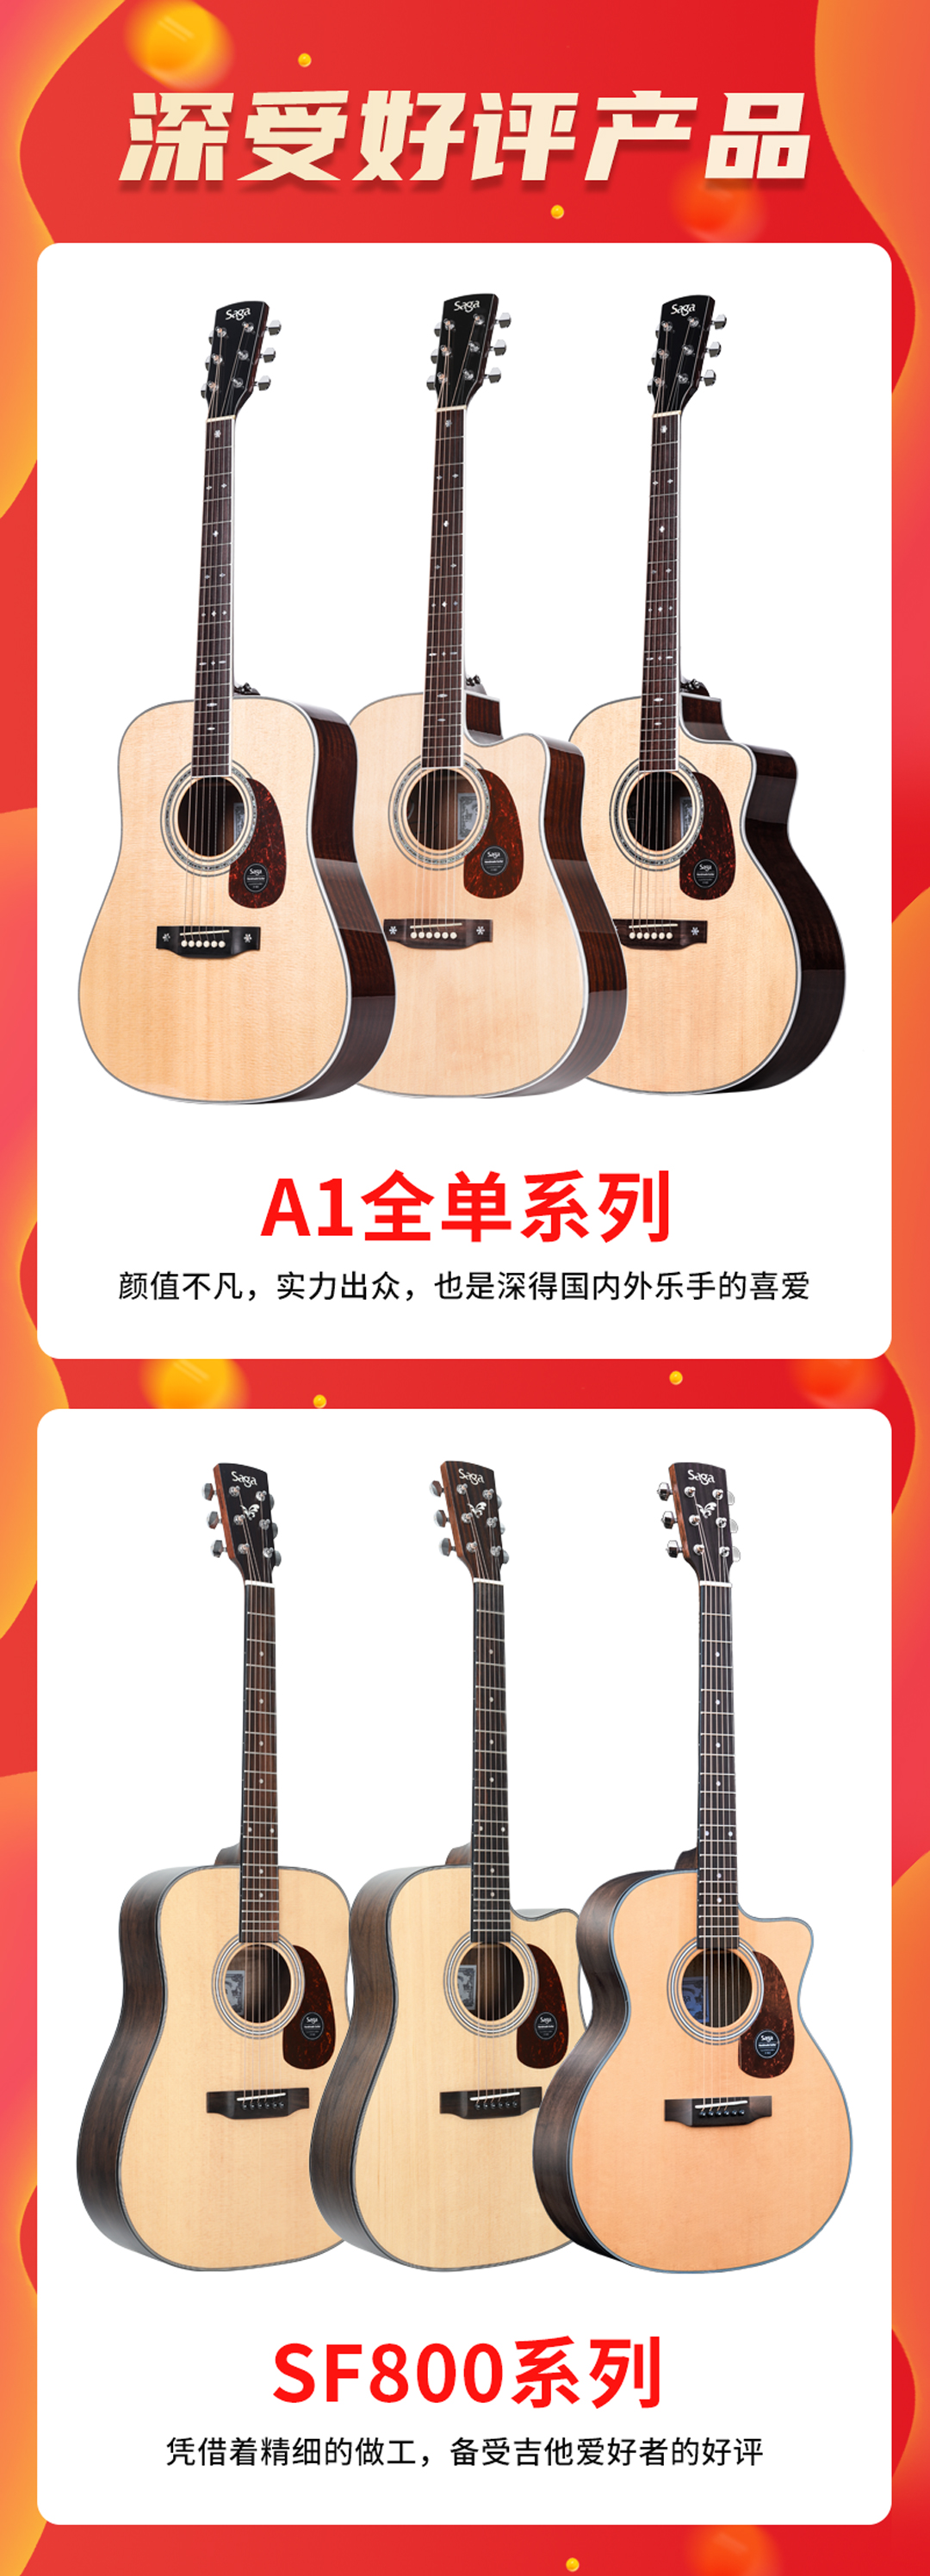 SAGA吉他热销商品榜首（英文）_04.jpg